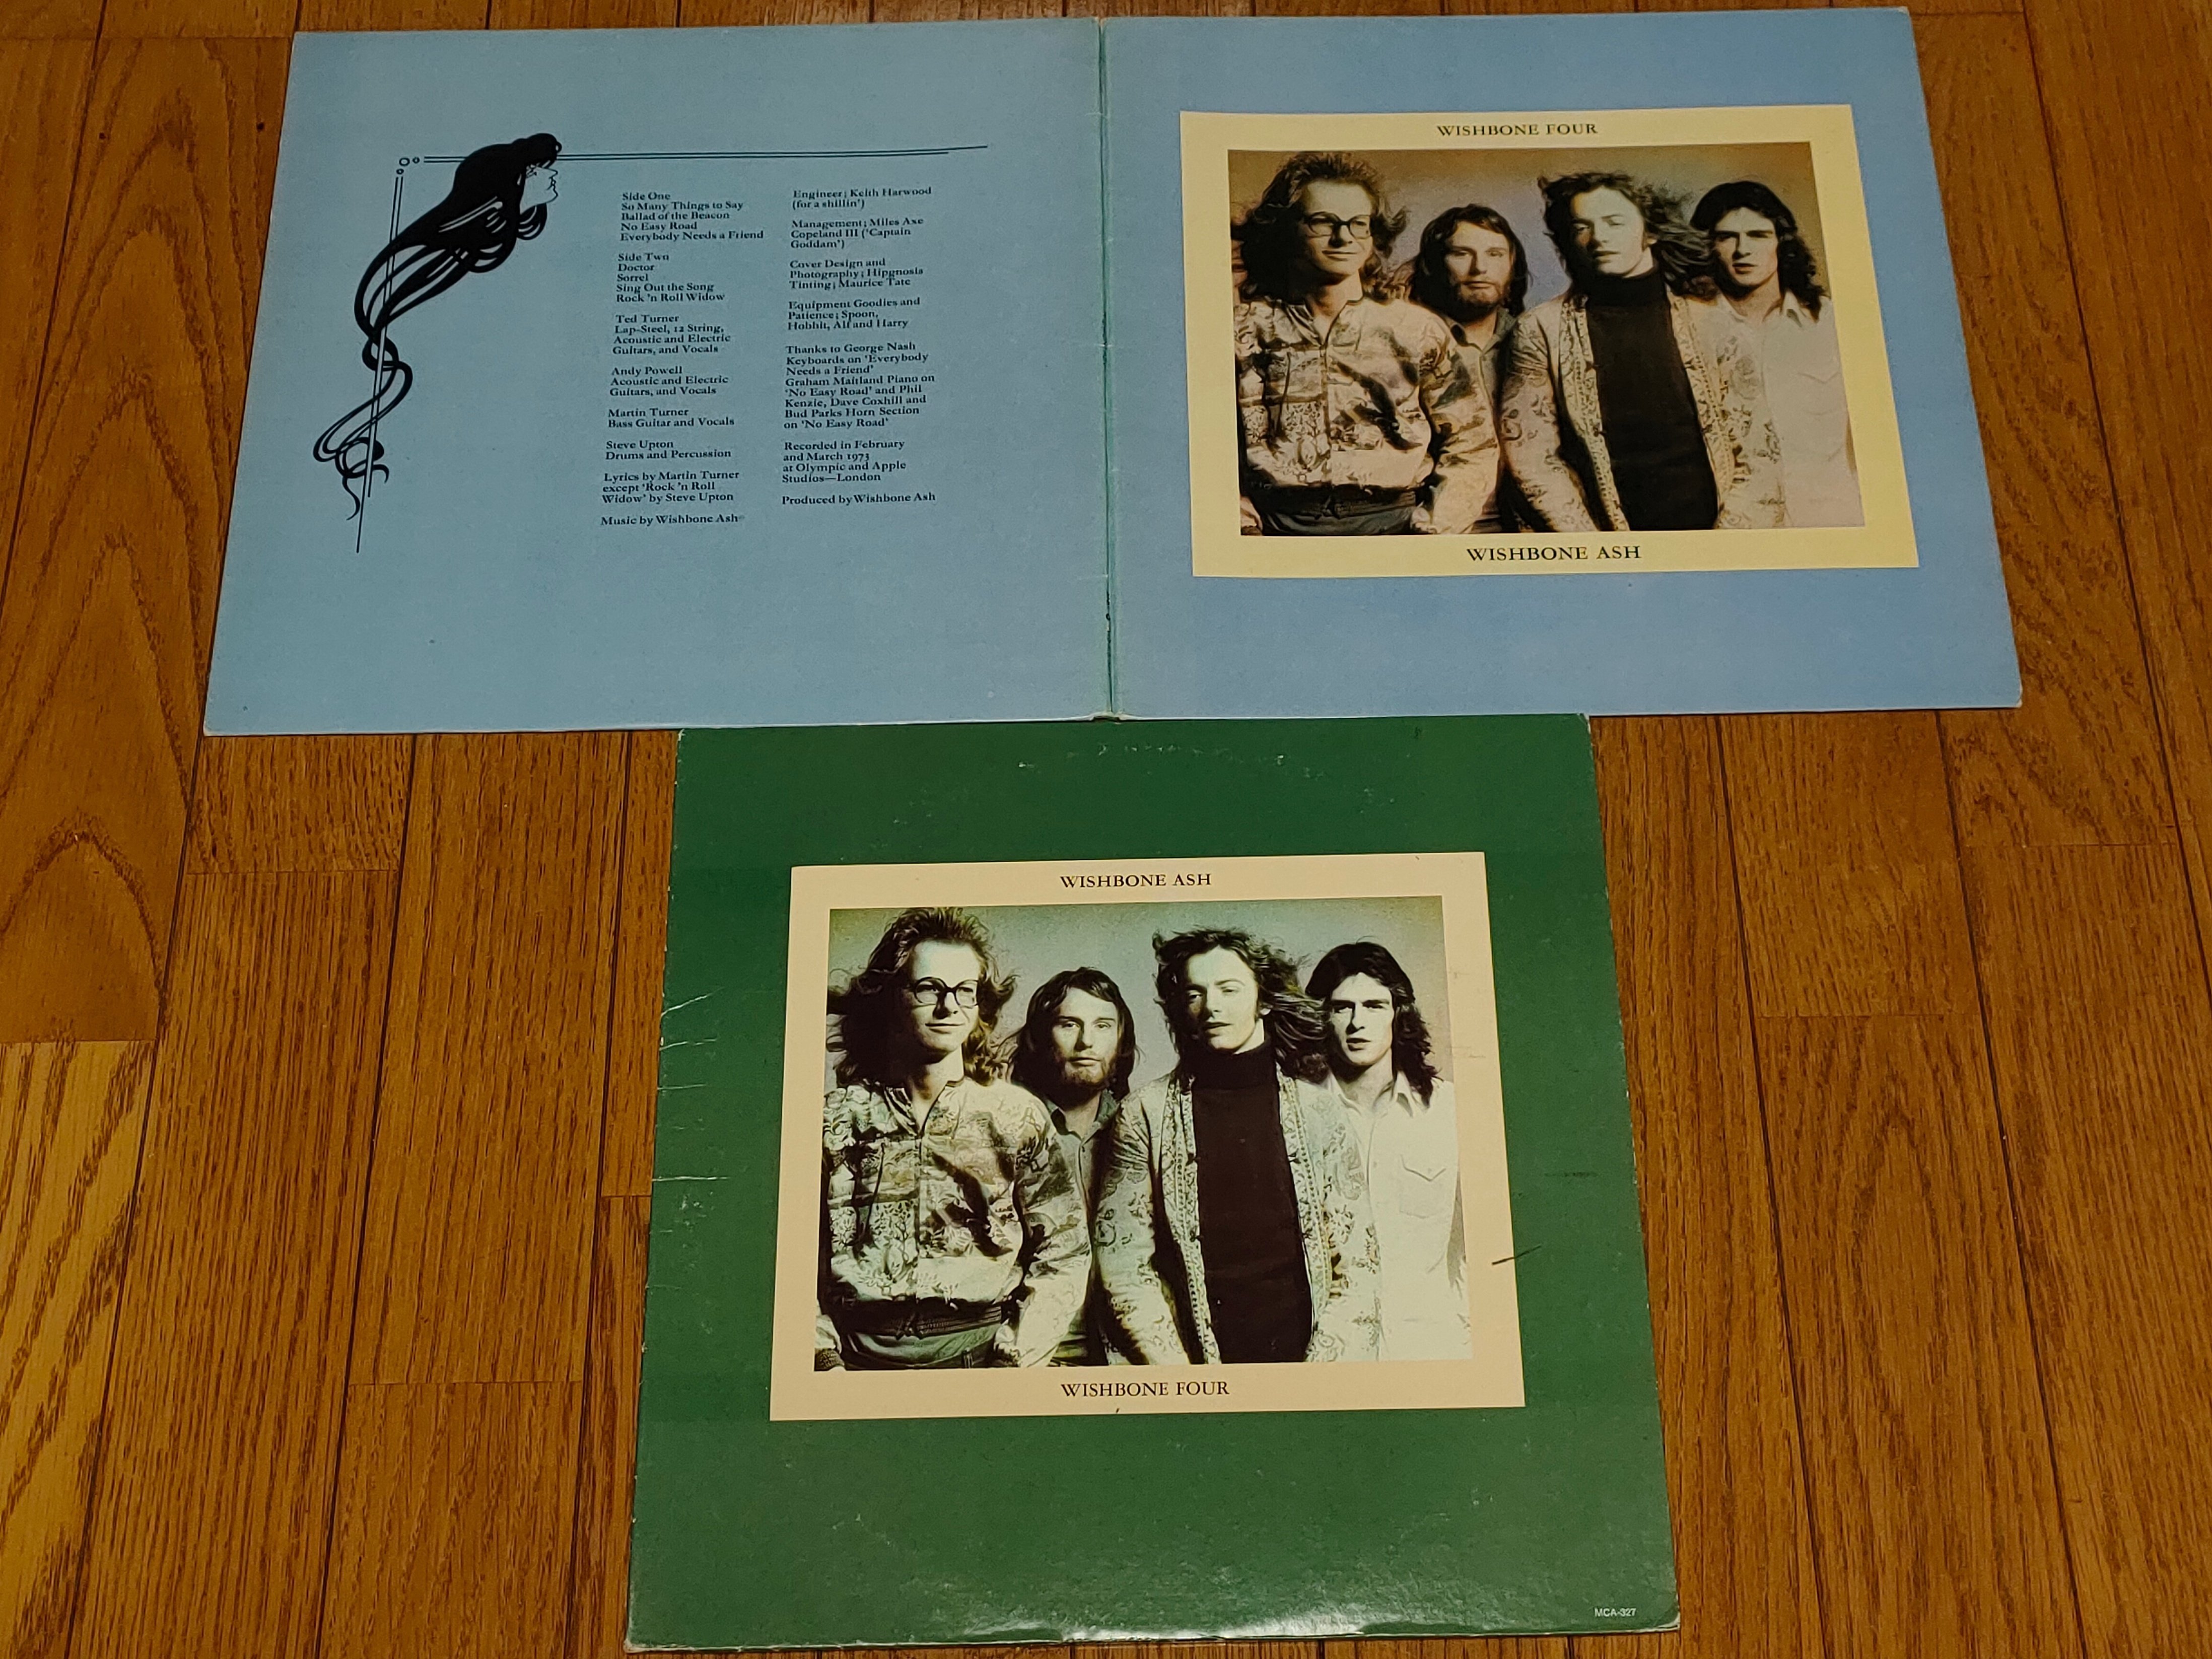 Wishbone Ash】(1970) アナログ米国盤で辿ってみた哀愁のツインリード